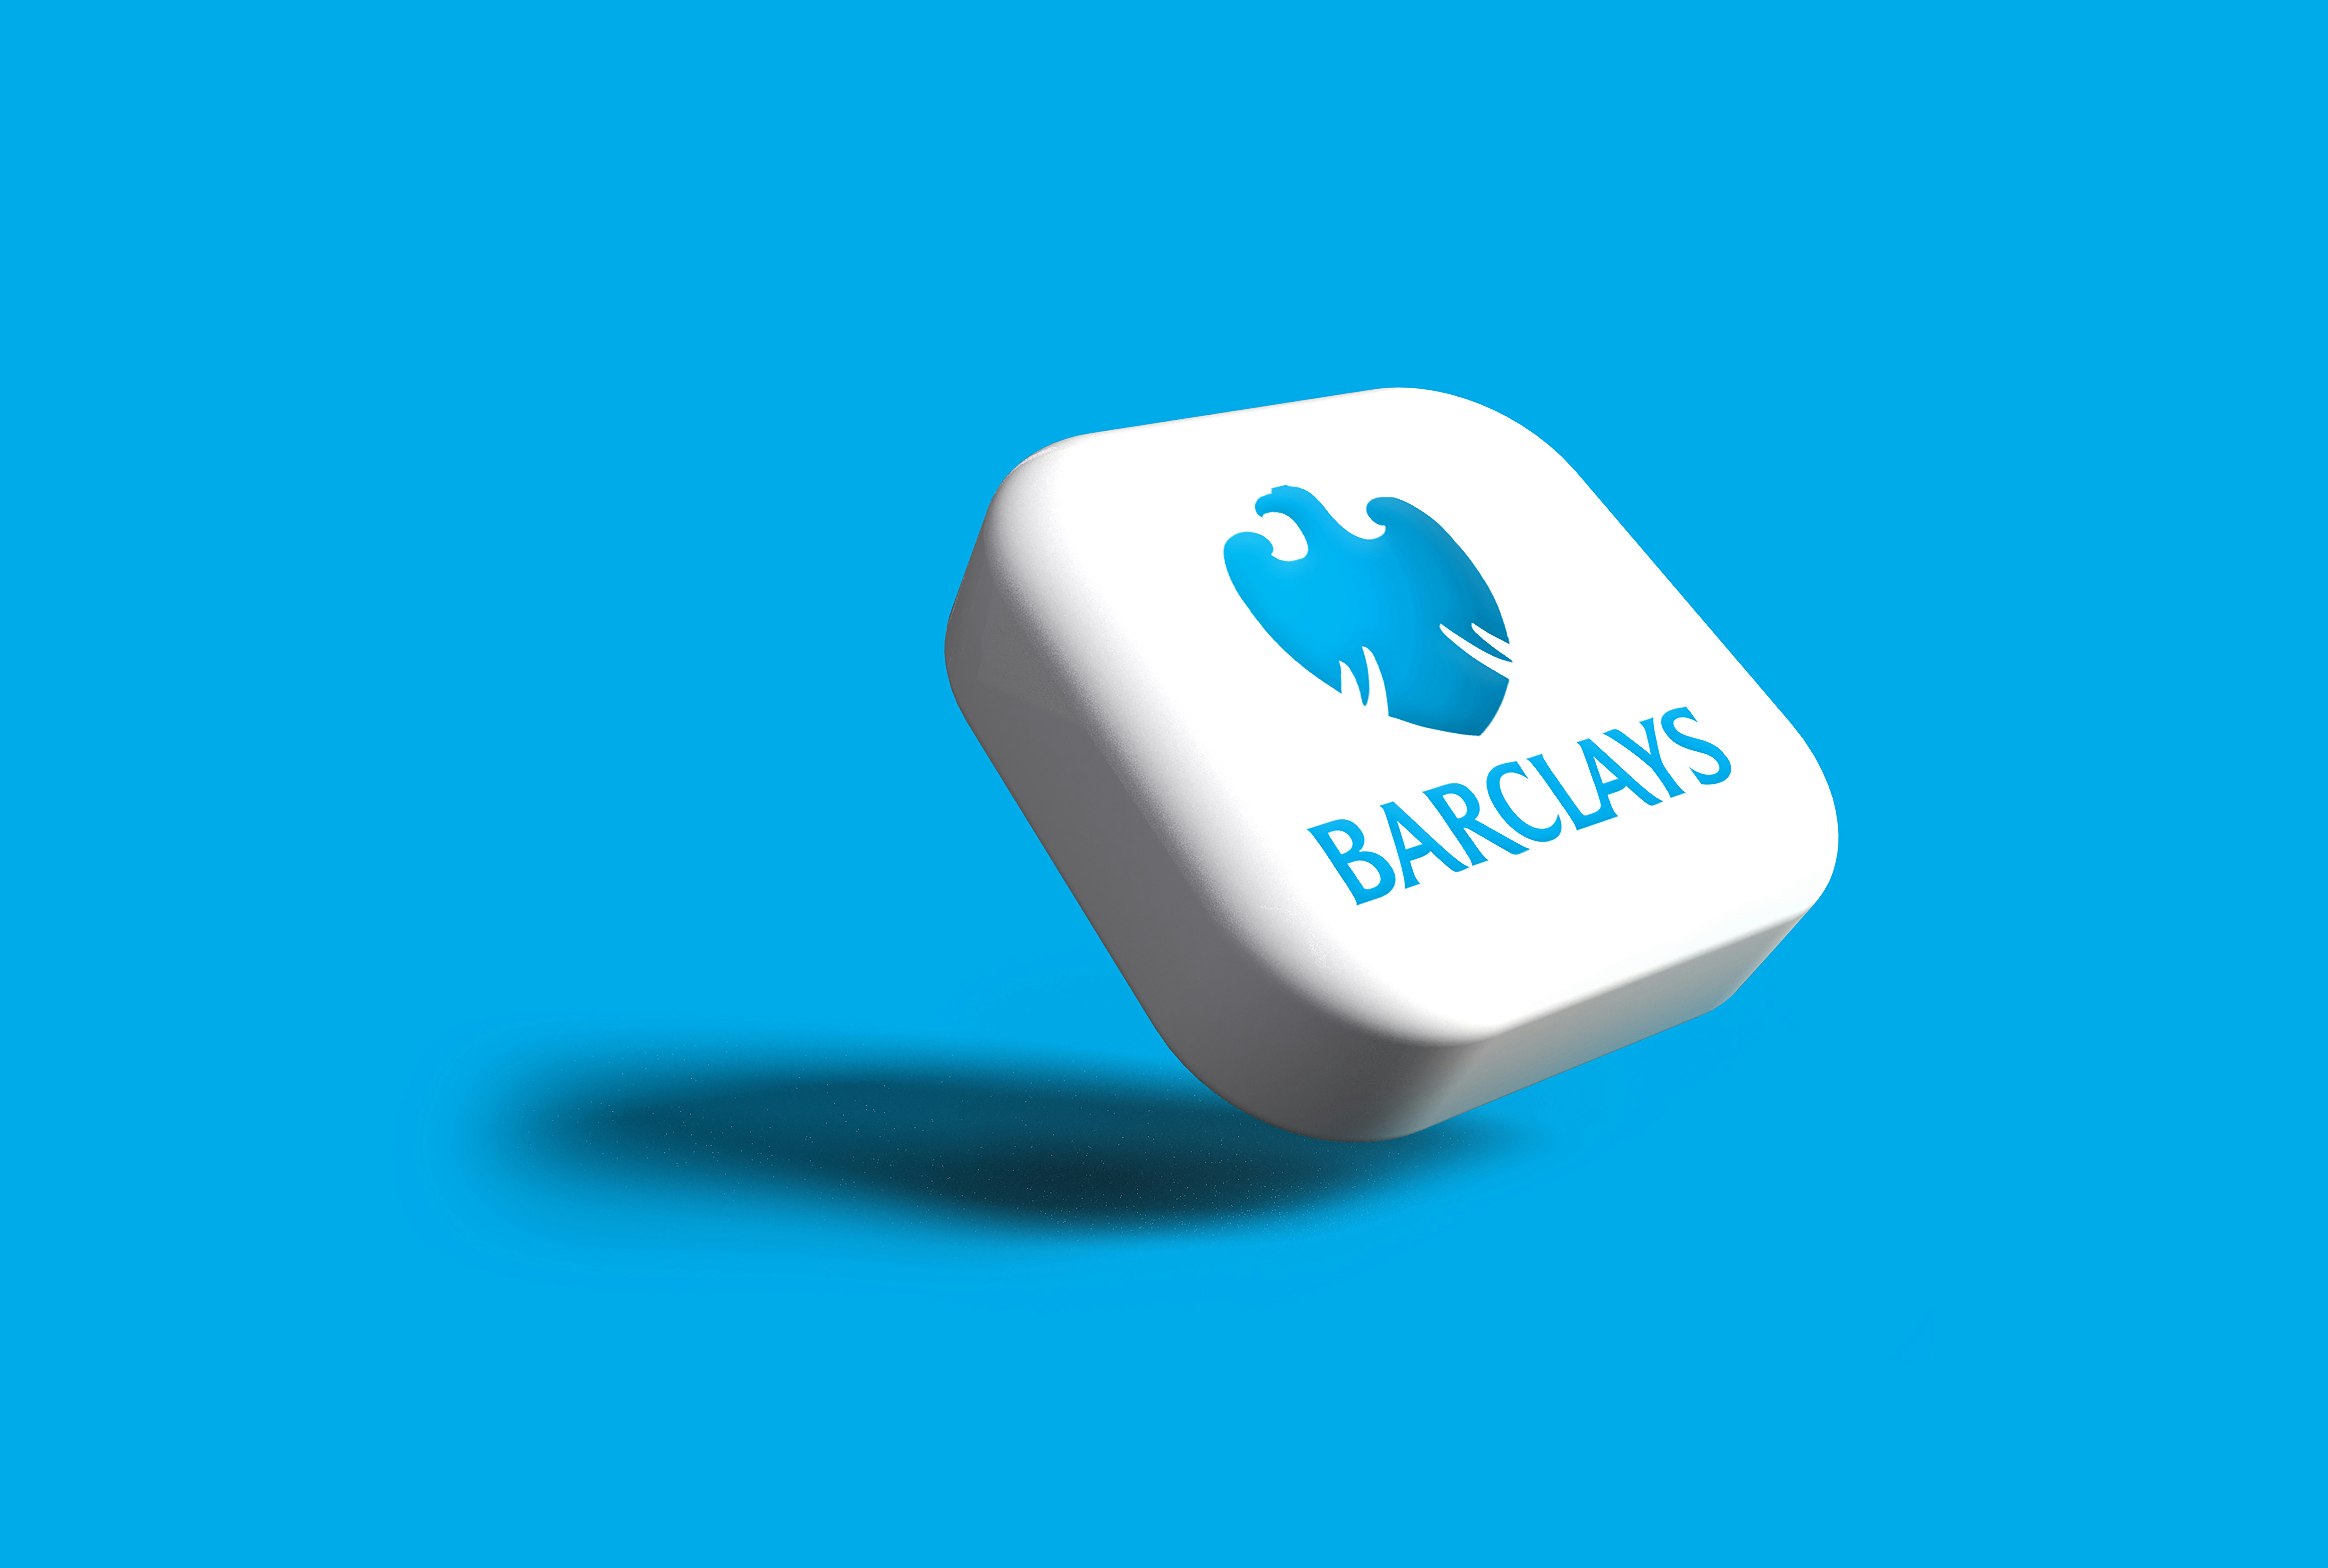 Le logo de Barclays